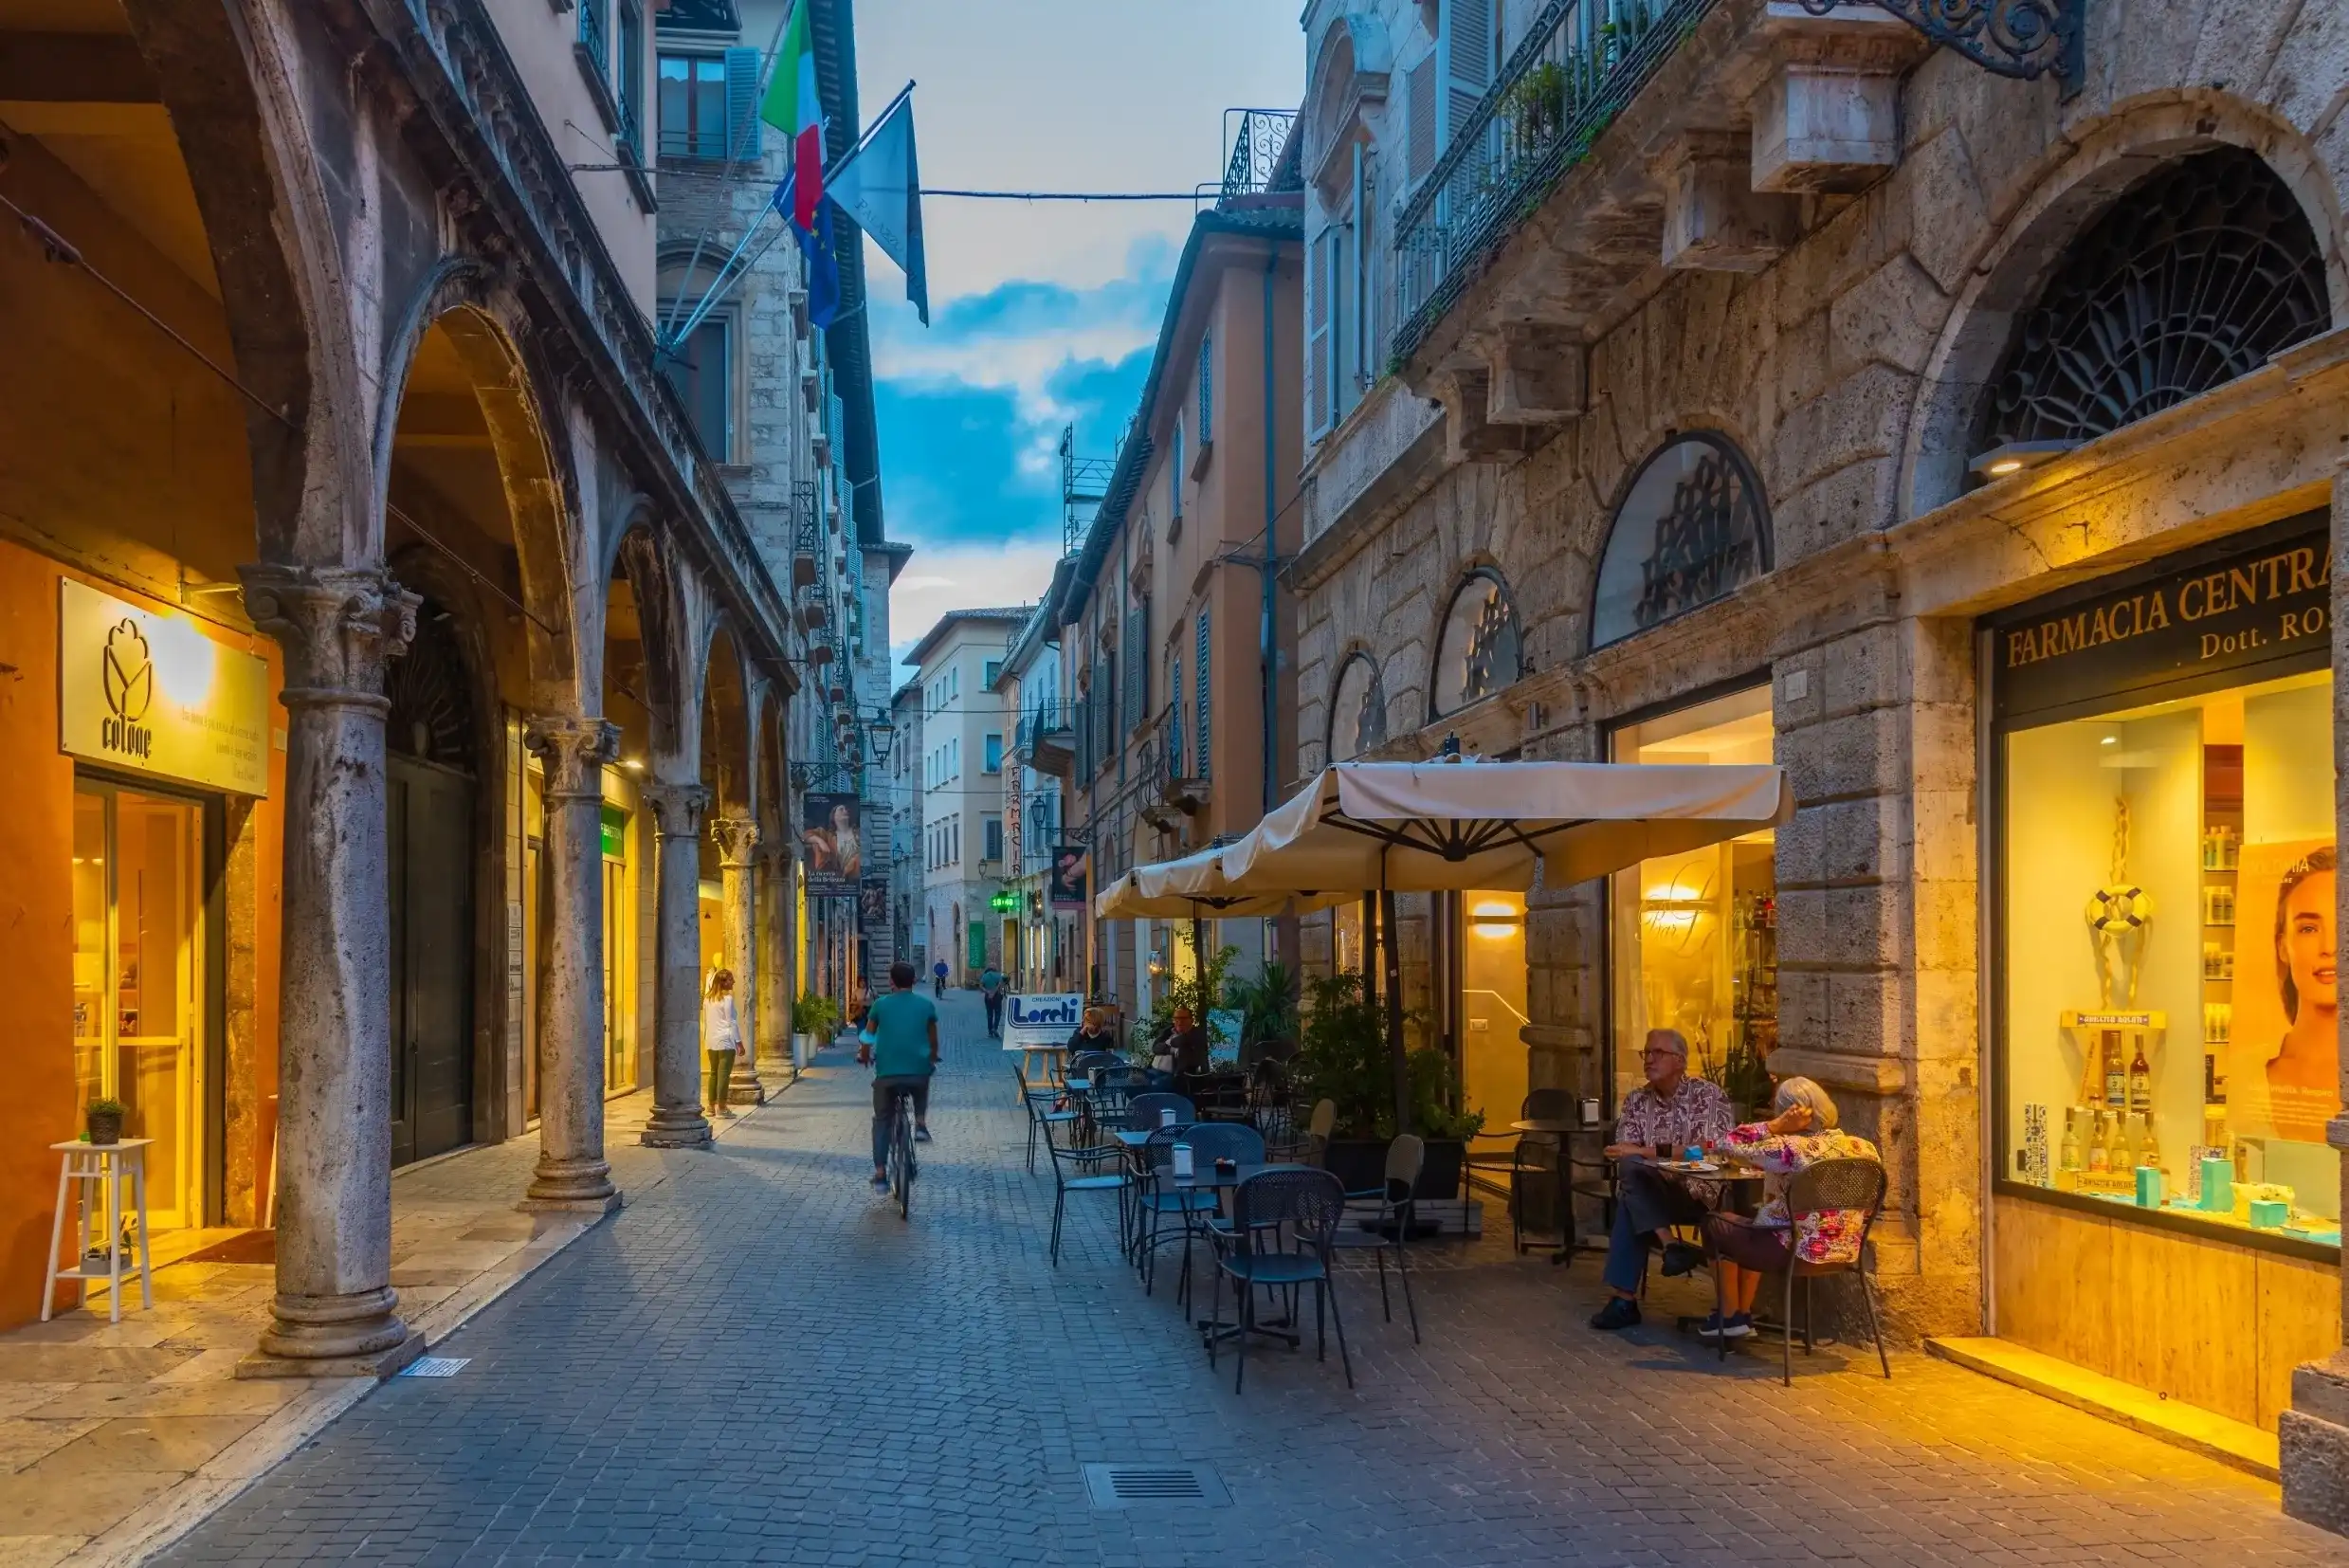 Best Ascoli Piceno hotels. Cheap hotels in Ascoli Piceno, Italy